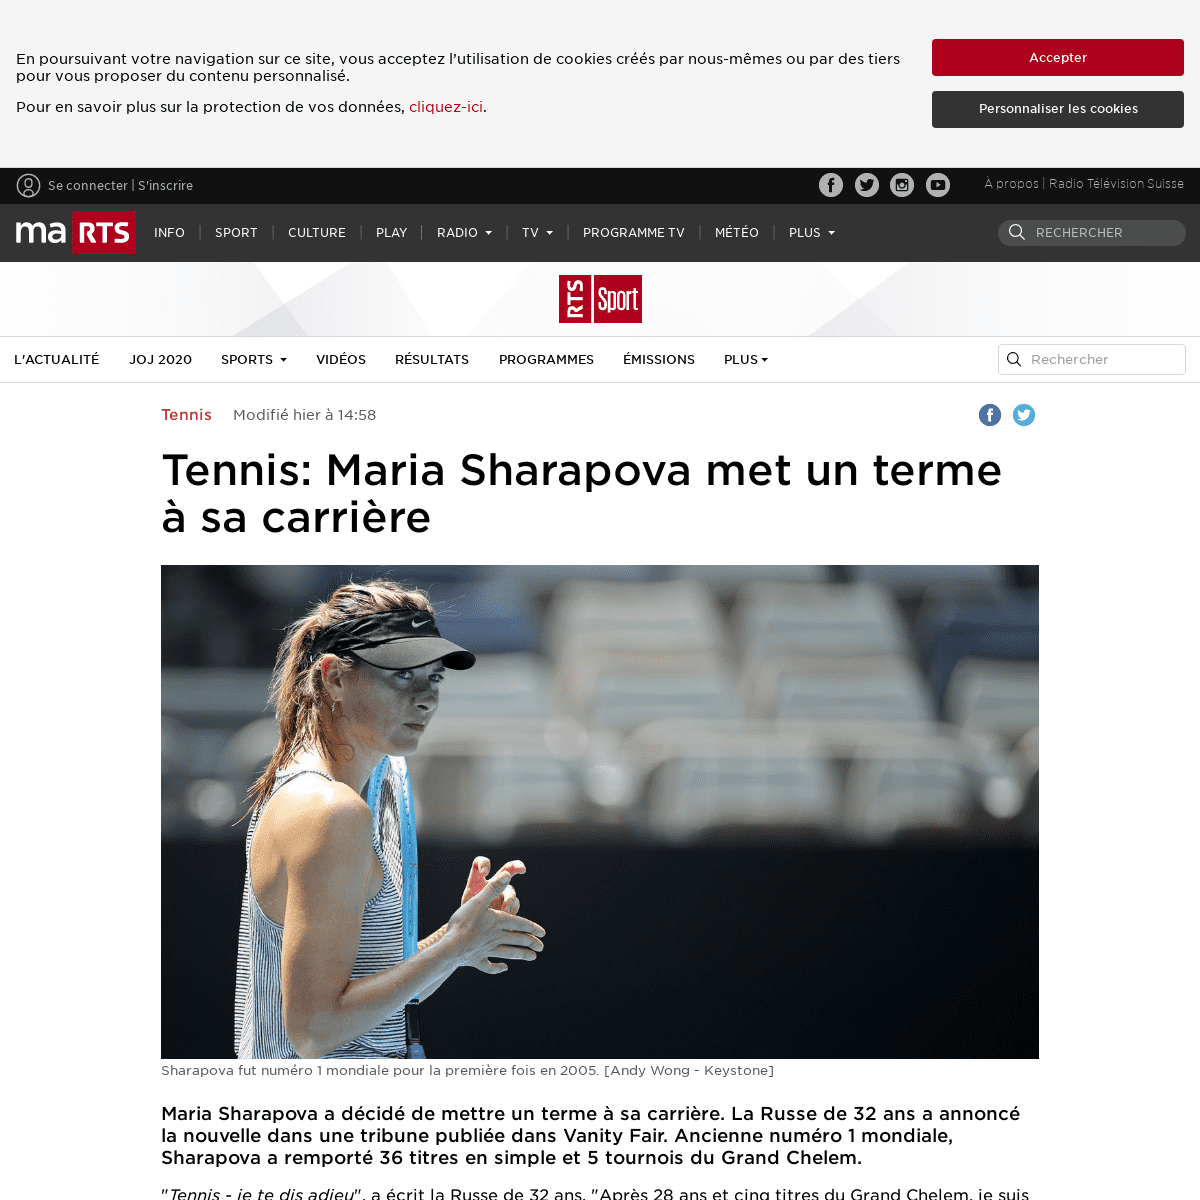 A complete backup of www.rts.ch/sport/tennis/11122442-tennis-maria-sharapova-met-un-terme-a-sa-carriere.html